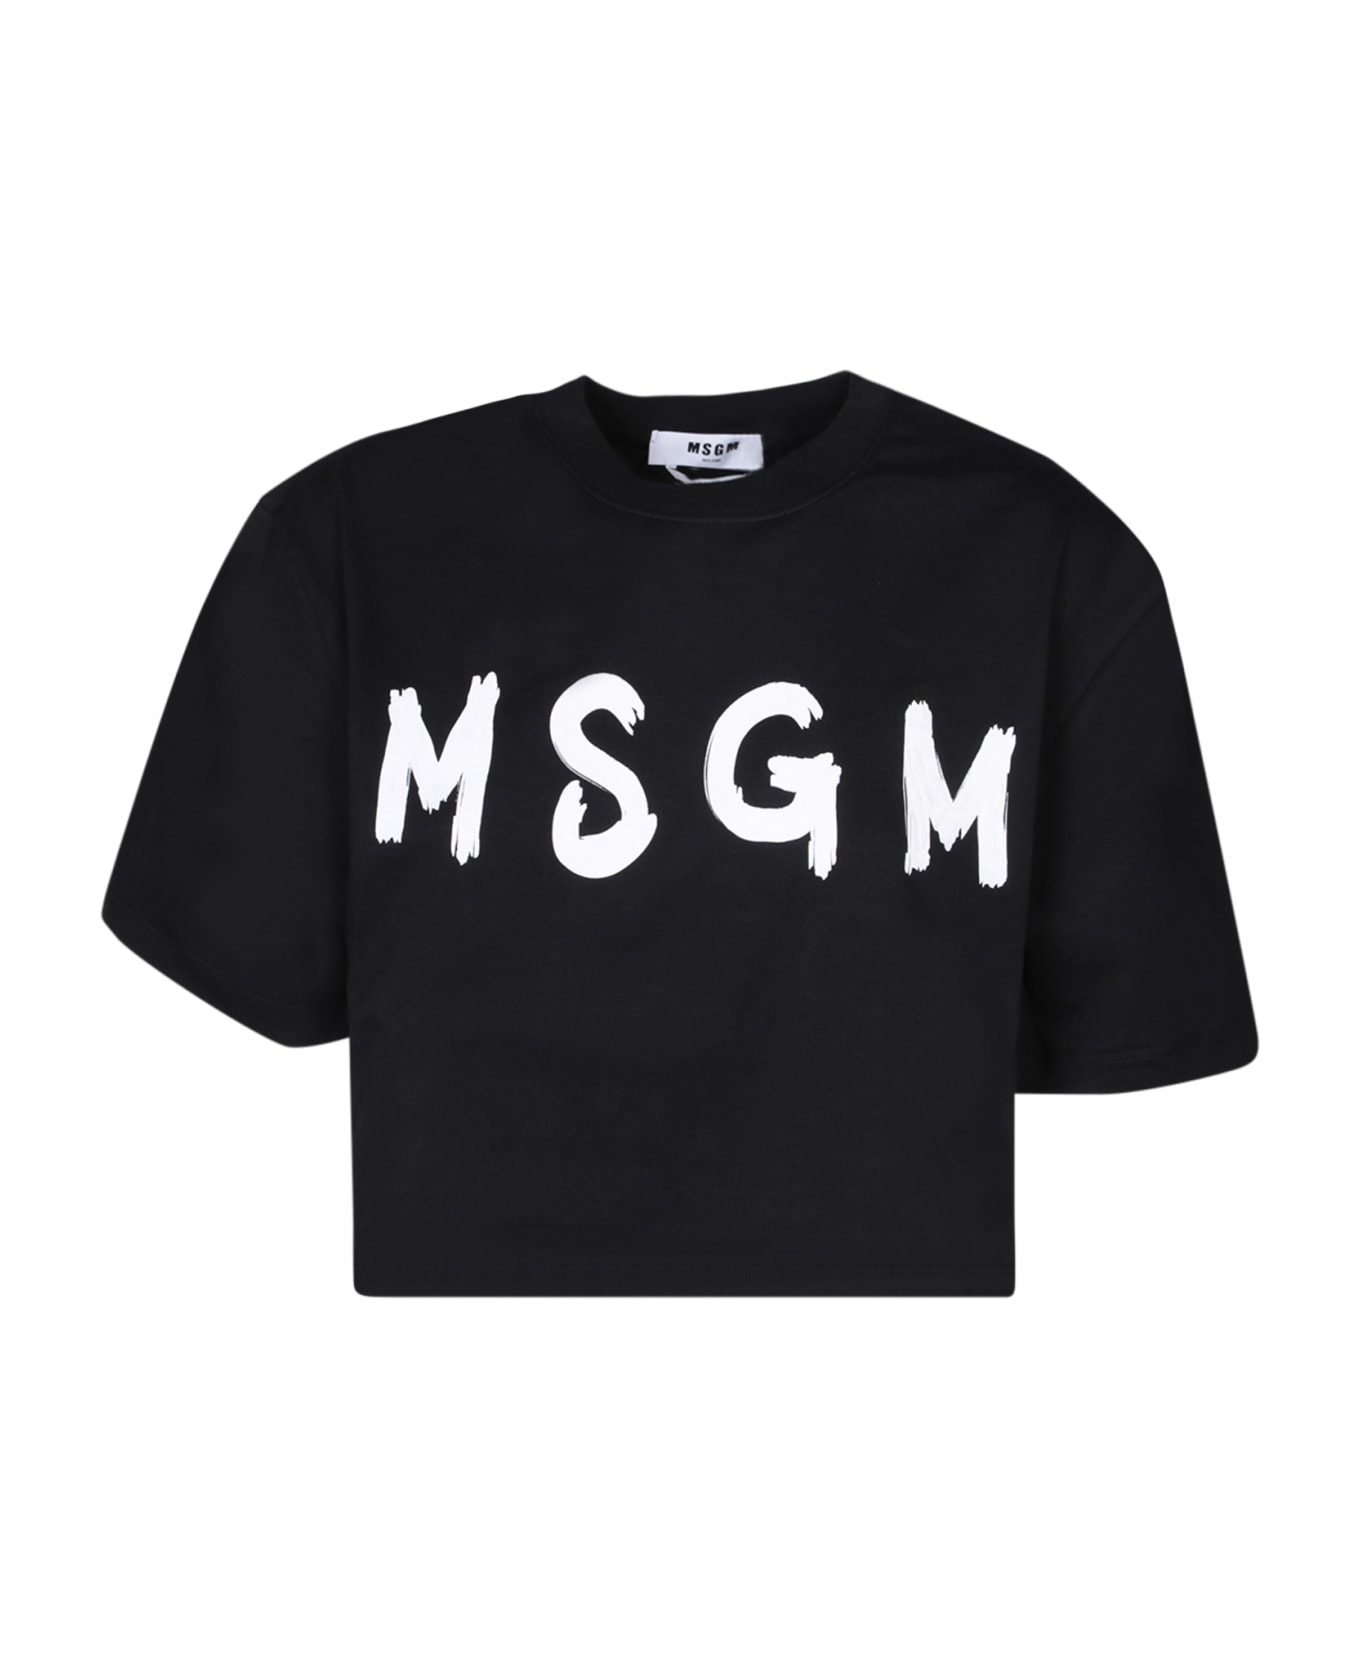 MSGM Graffiti Logo Black T-shirt - Black